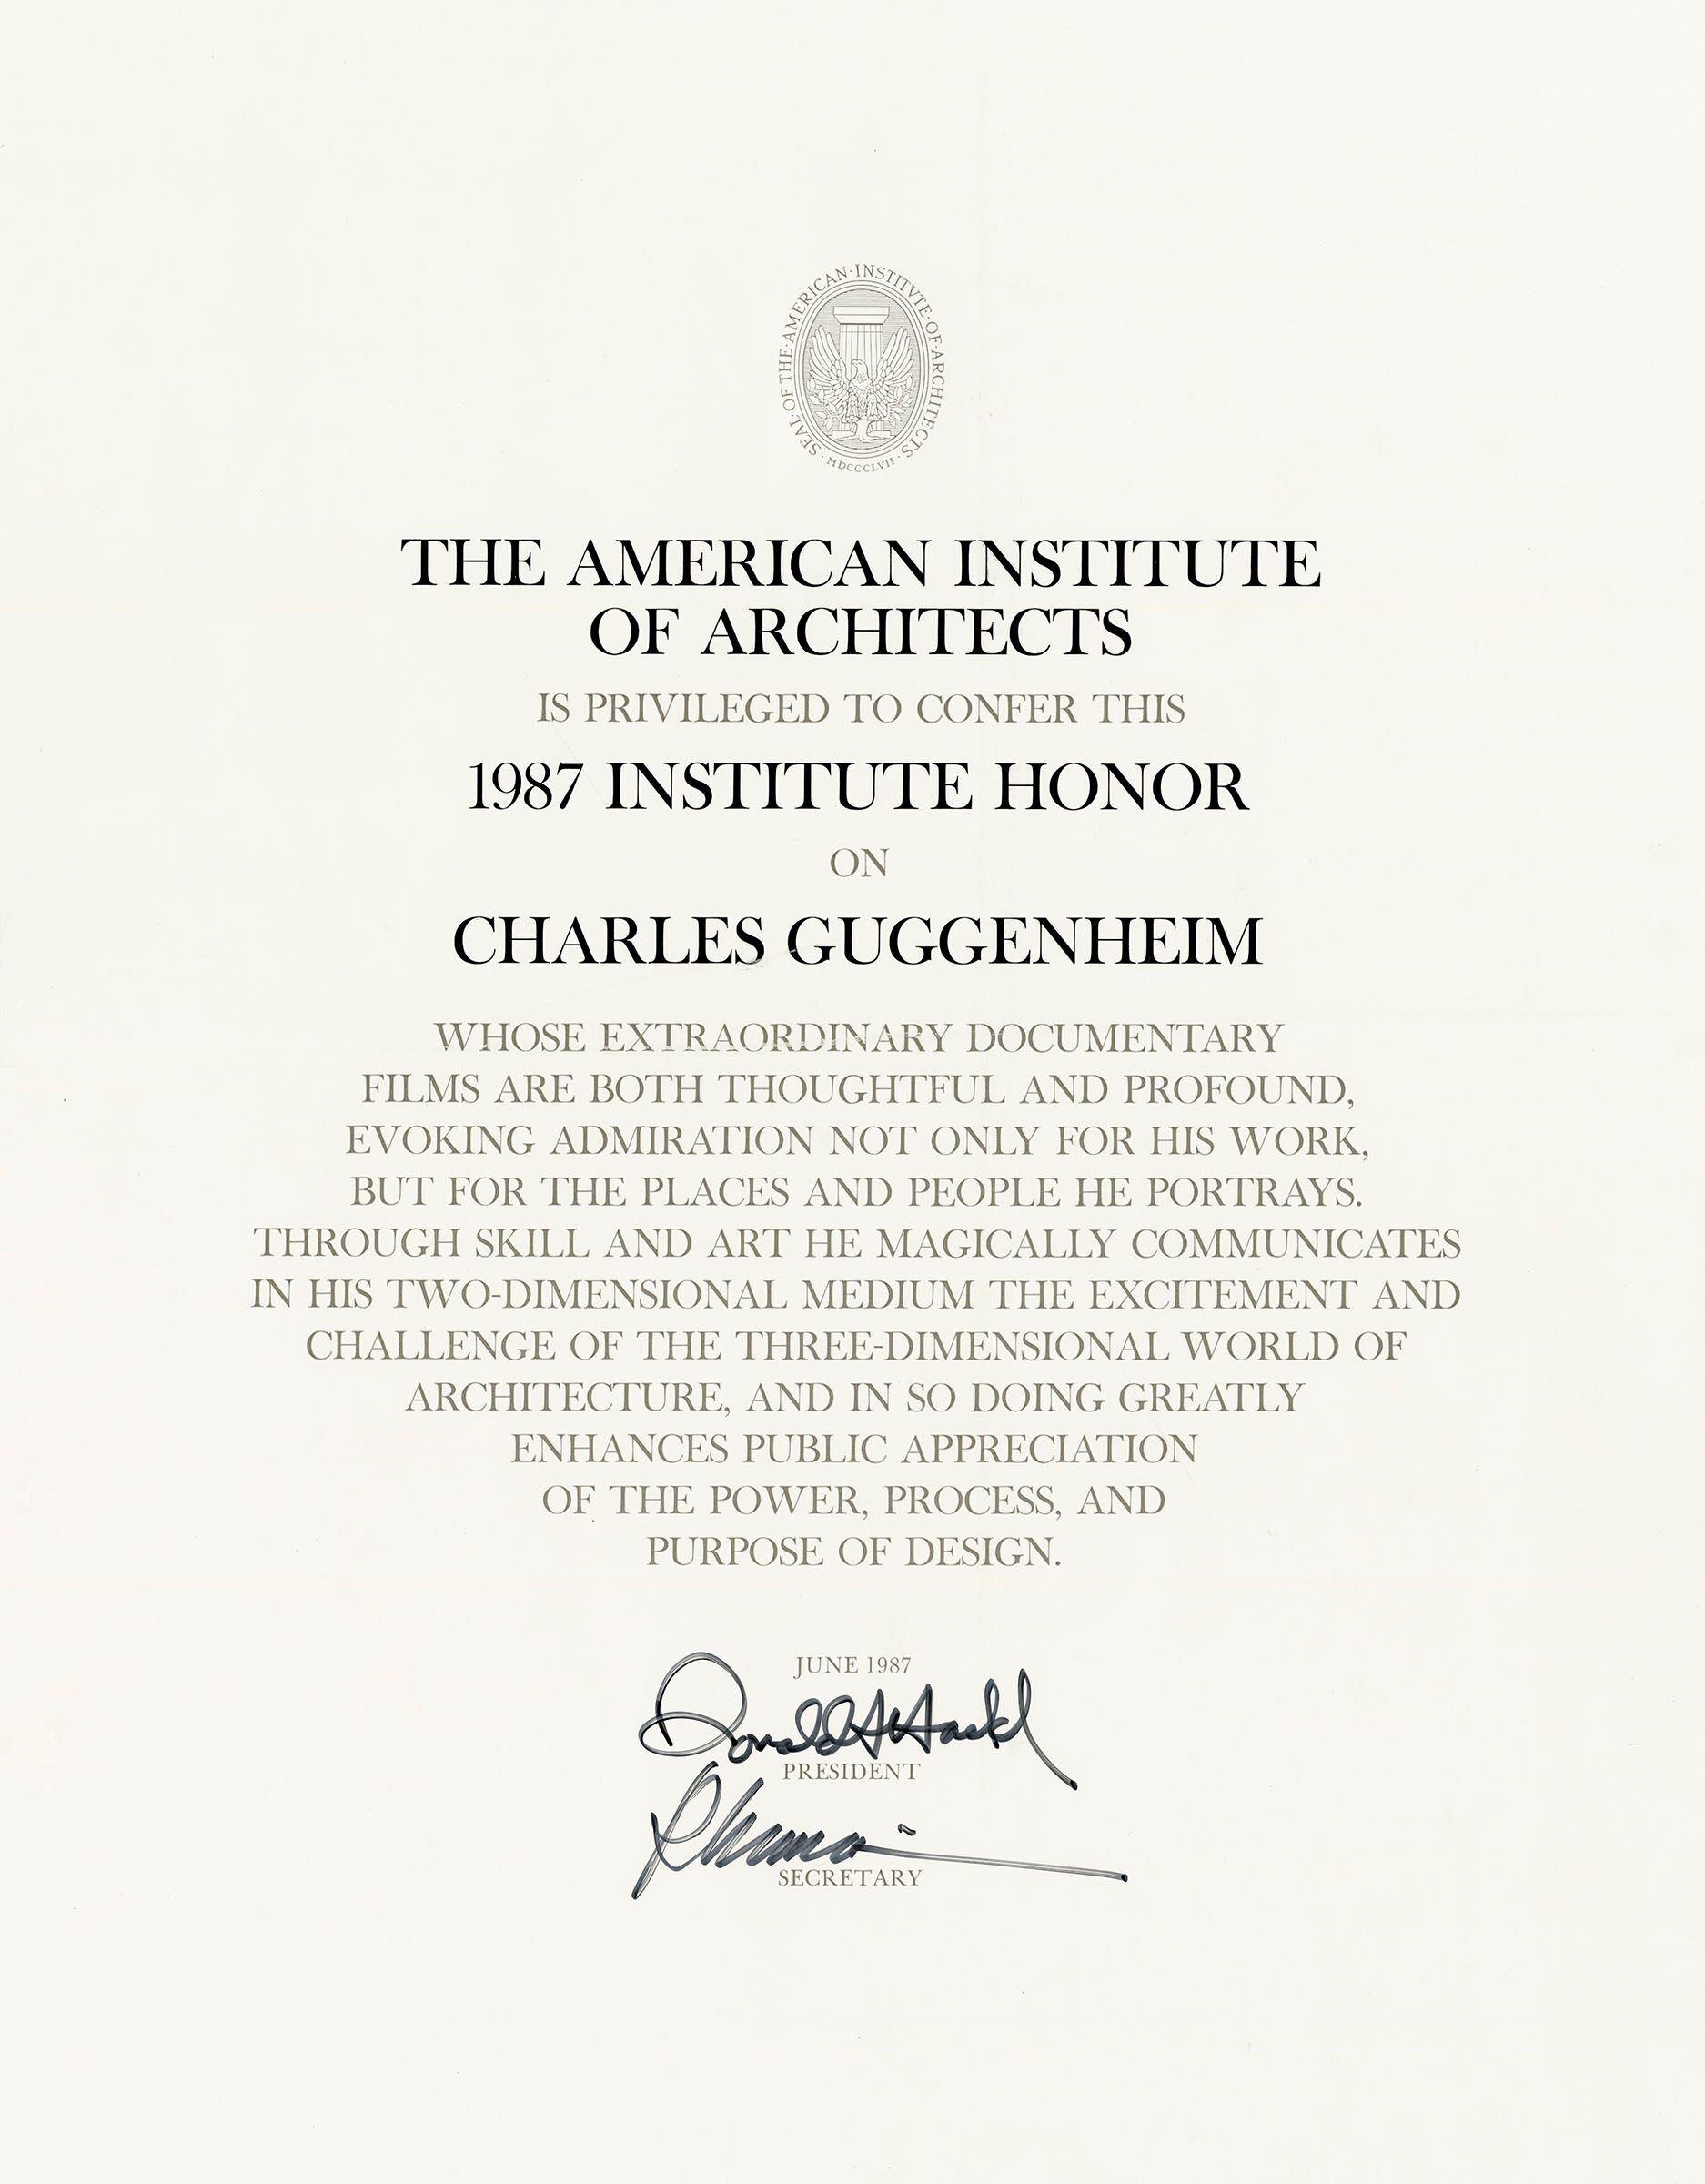 American Institute of Architects certificate, 1987